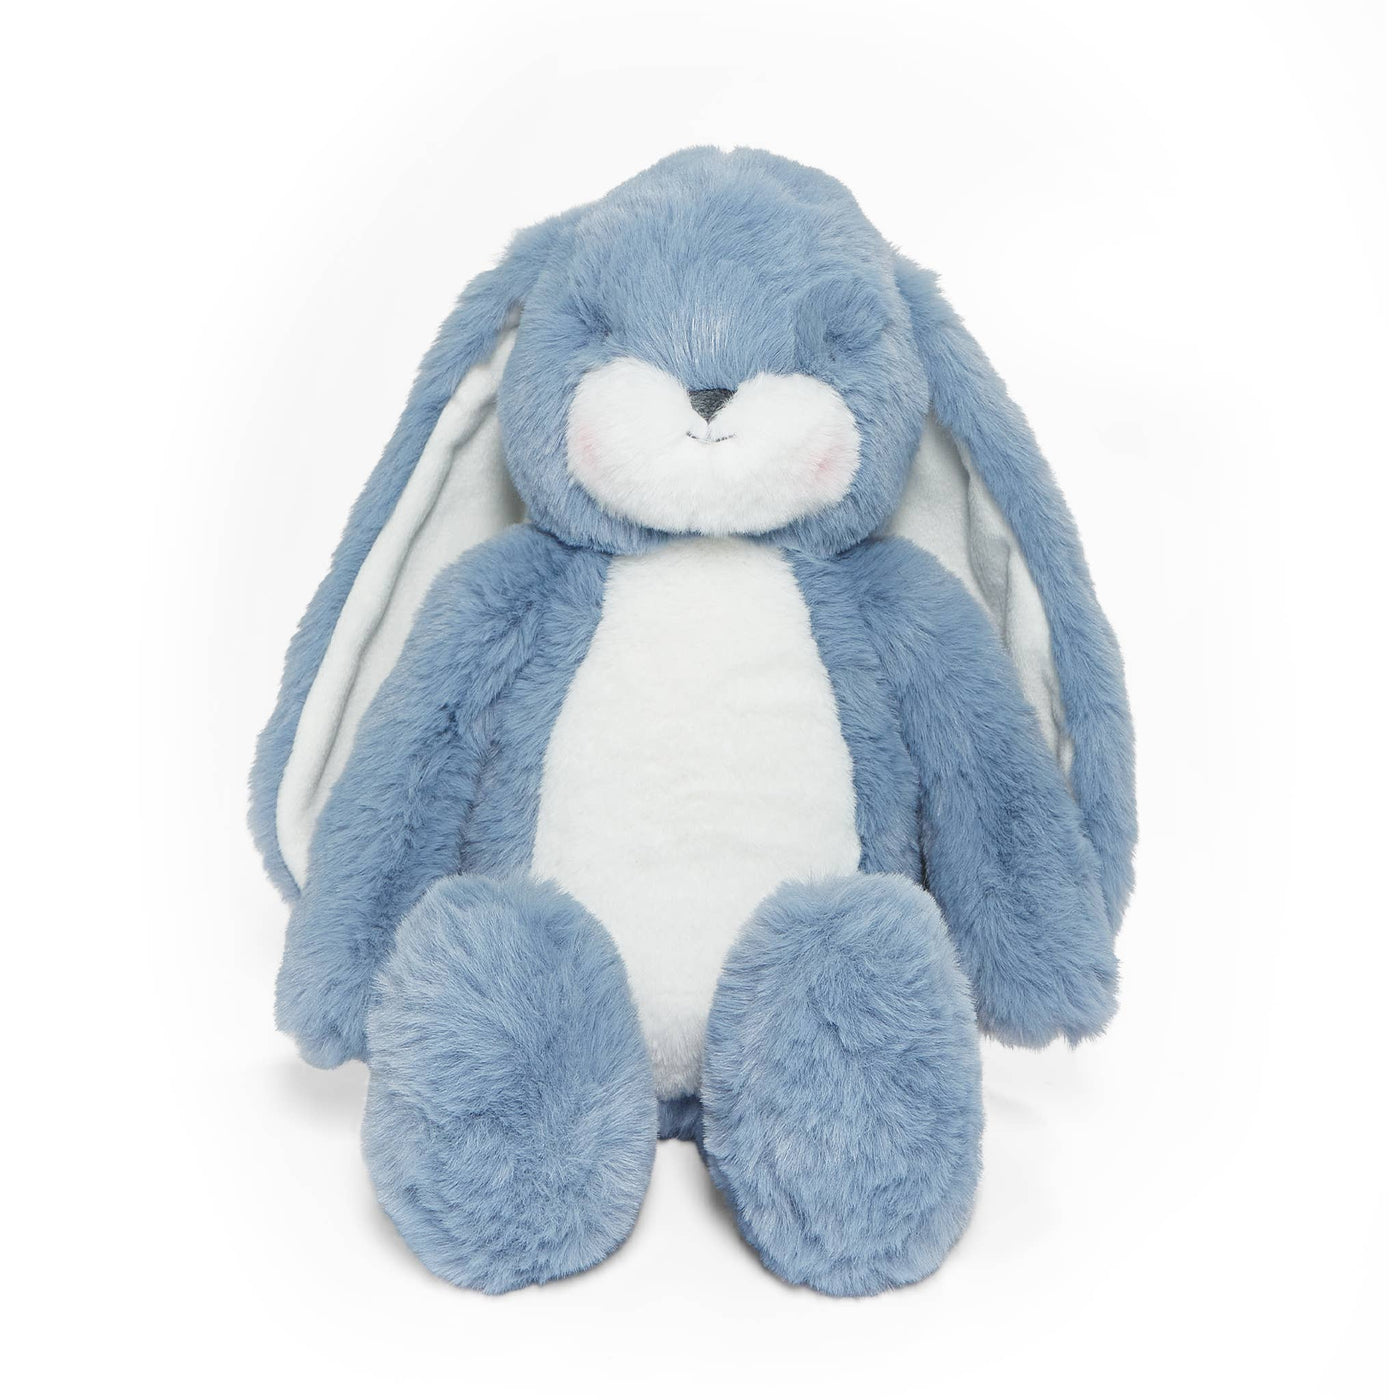 Little Nibble 12" Floppy Bunny - Blue (Lavender Lustre)